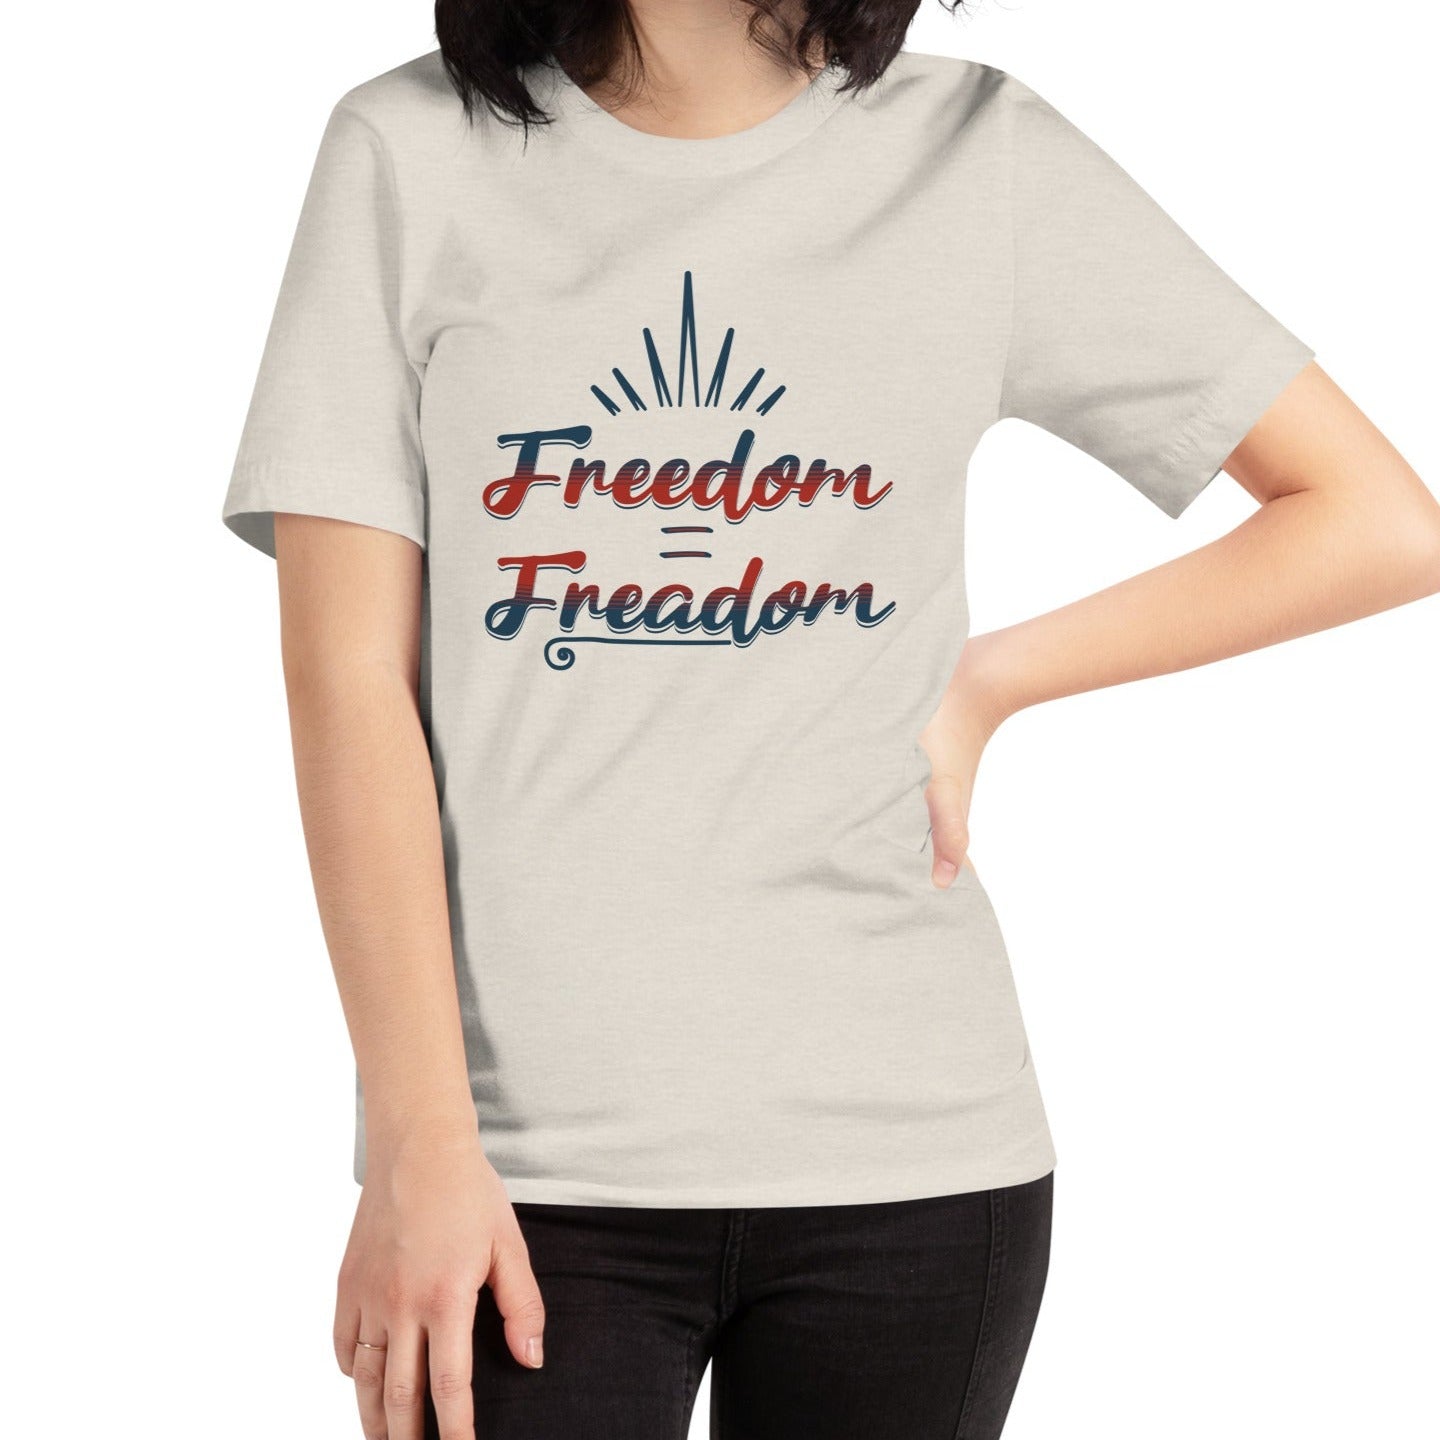 ADULT "Freedom equals fREADom" Patriotic July 4th 1st Amendment Summer Reading Library Librarian Unisex t-shirt tshirt